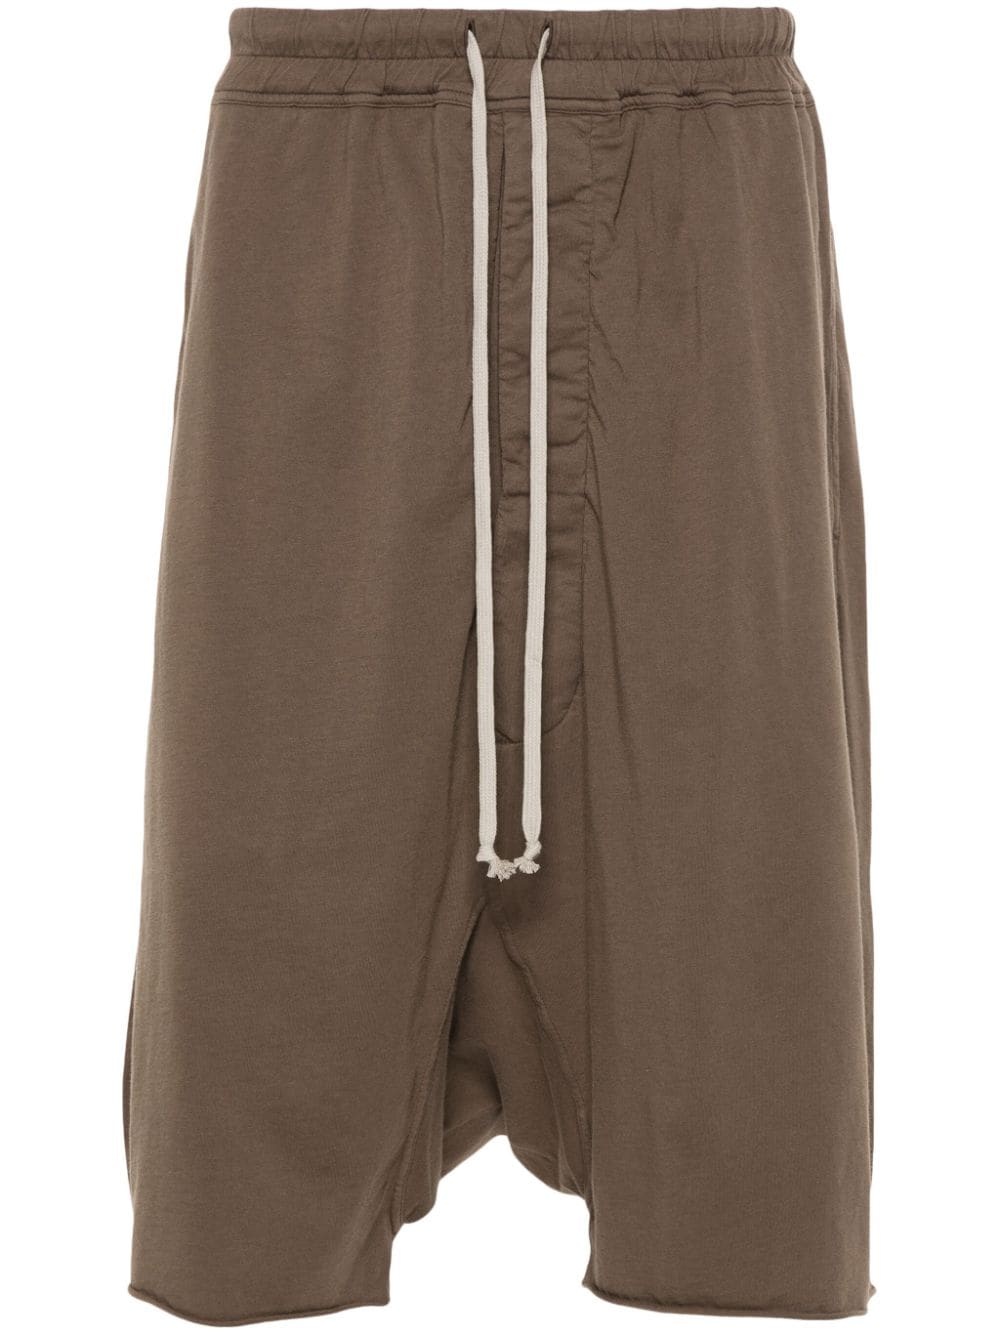 organic-cotton drop-crotch shorts - 1